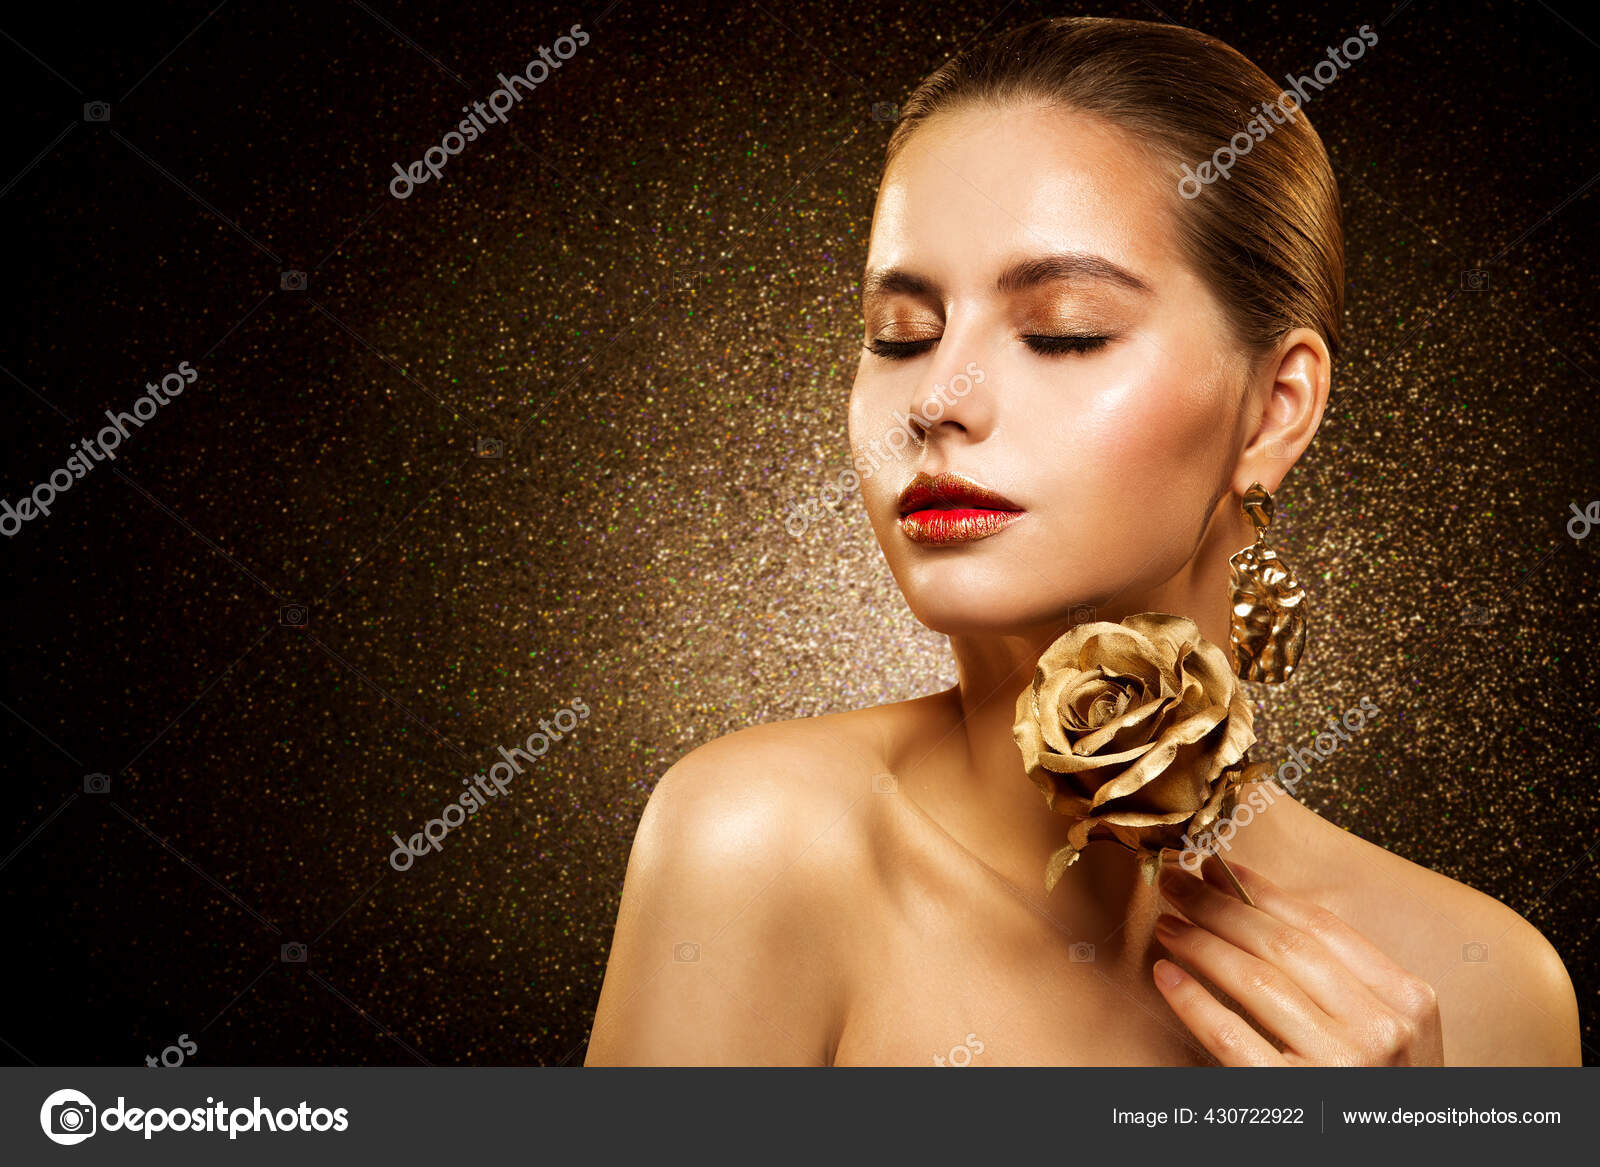 Woman Golden Skin, Fashion Model Painted Gold Body Art, Beauty